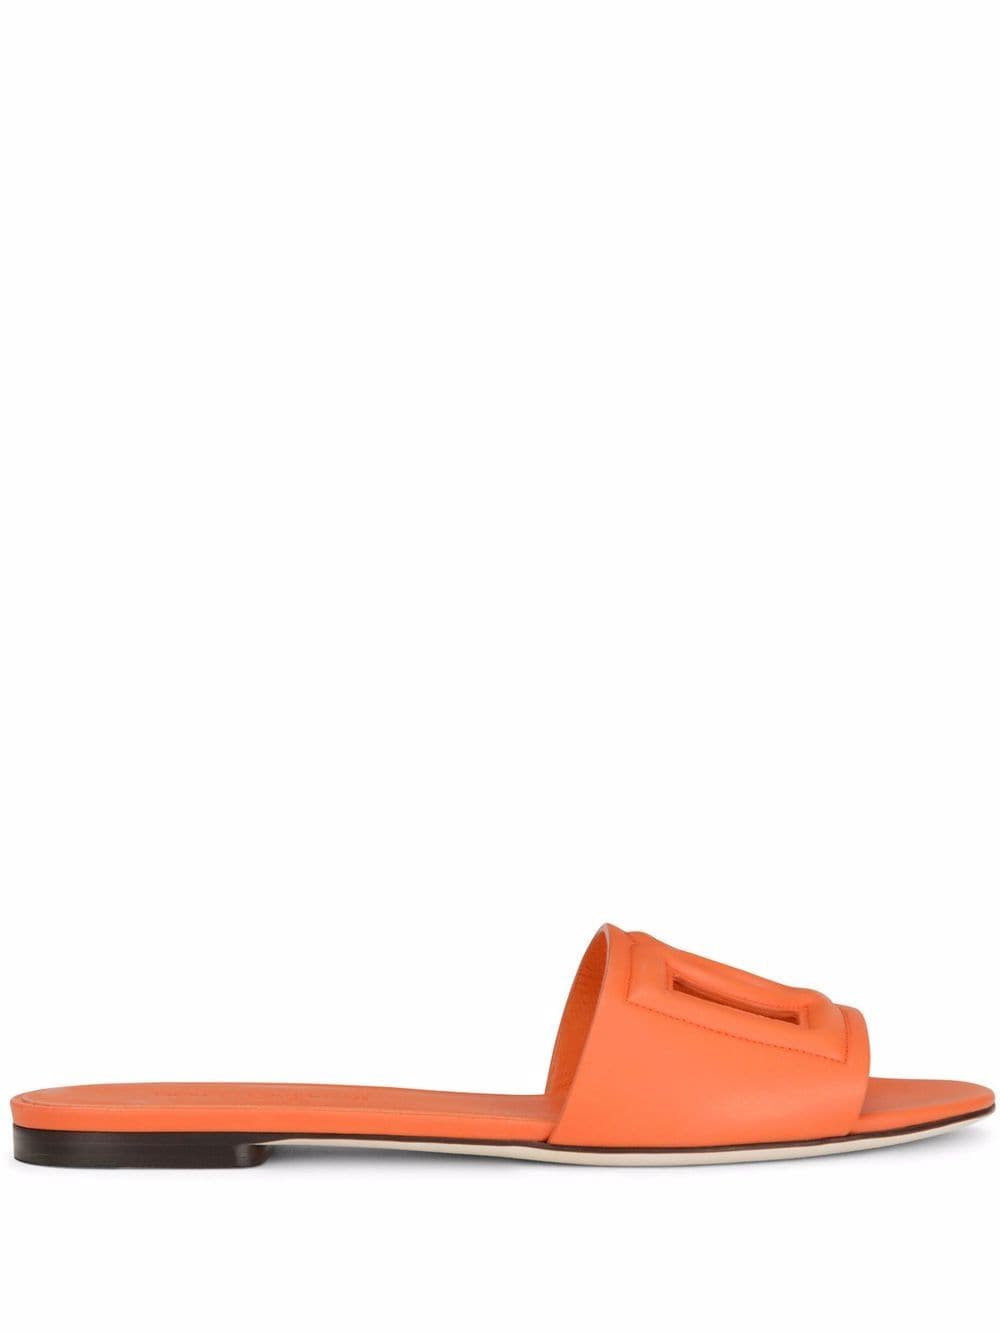 Sandali in pelle arancione con logo DG<br><br><br>